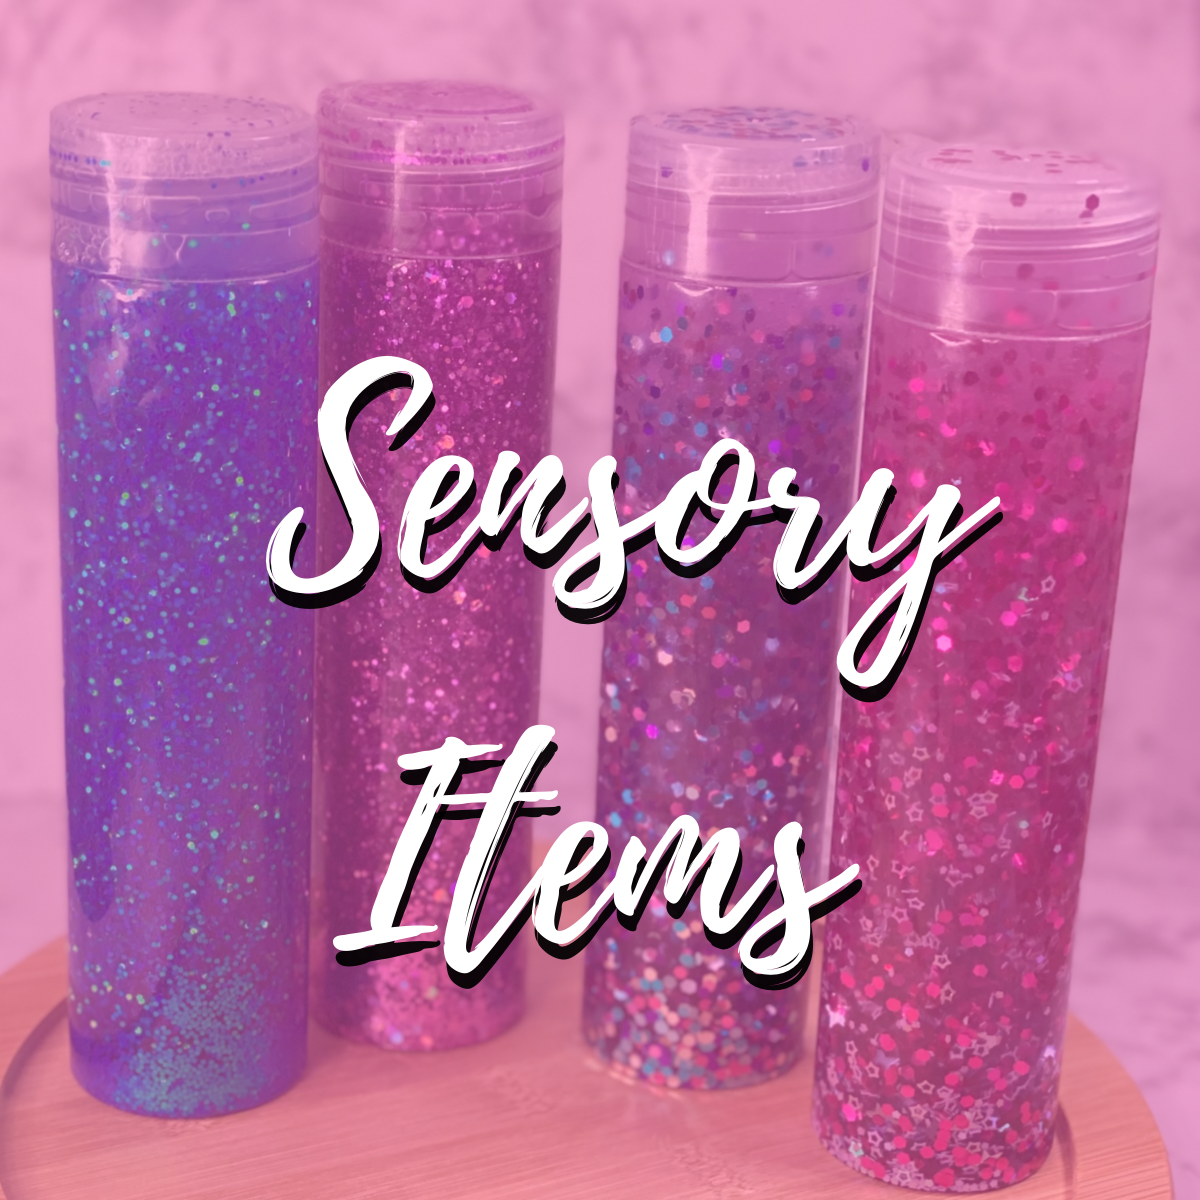 Sensory Items